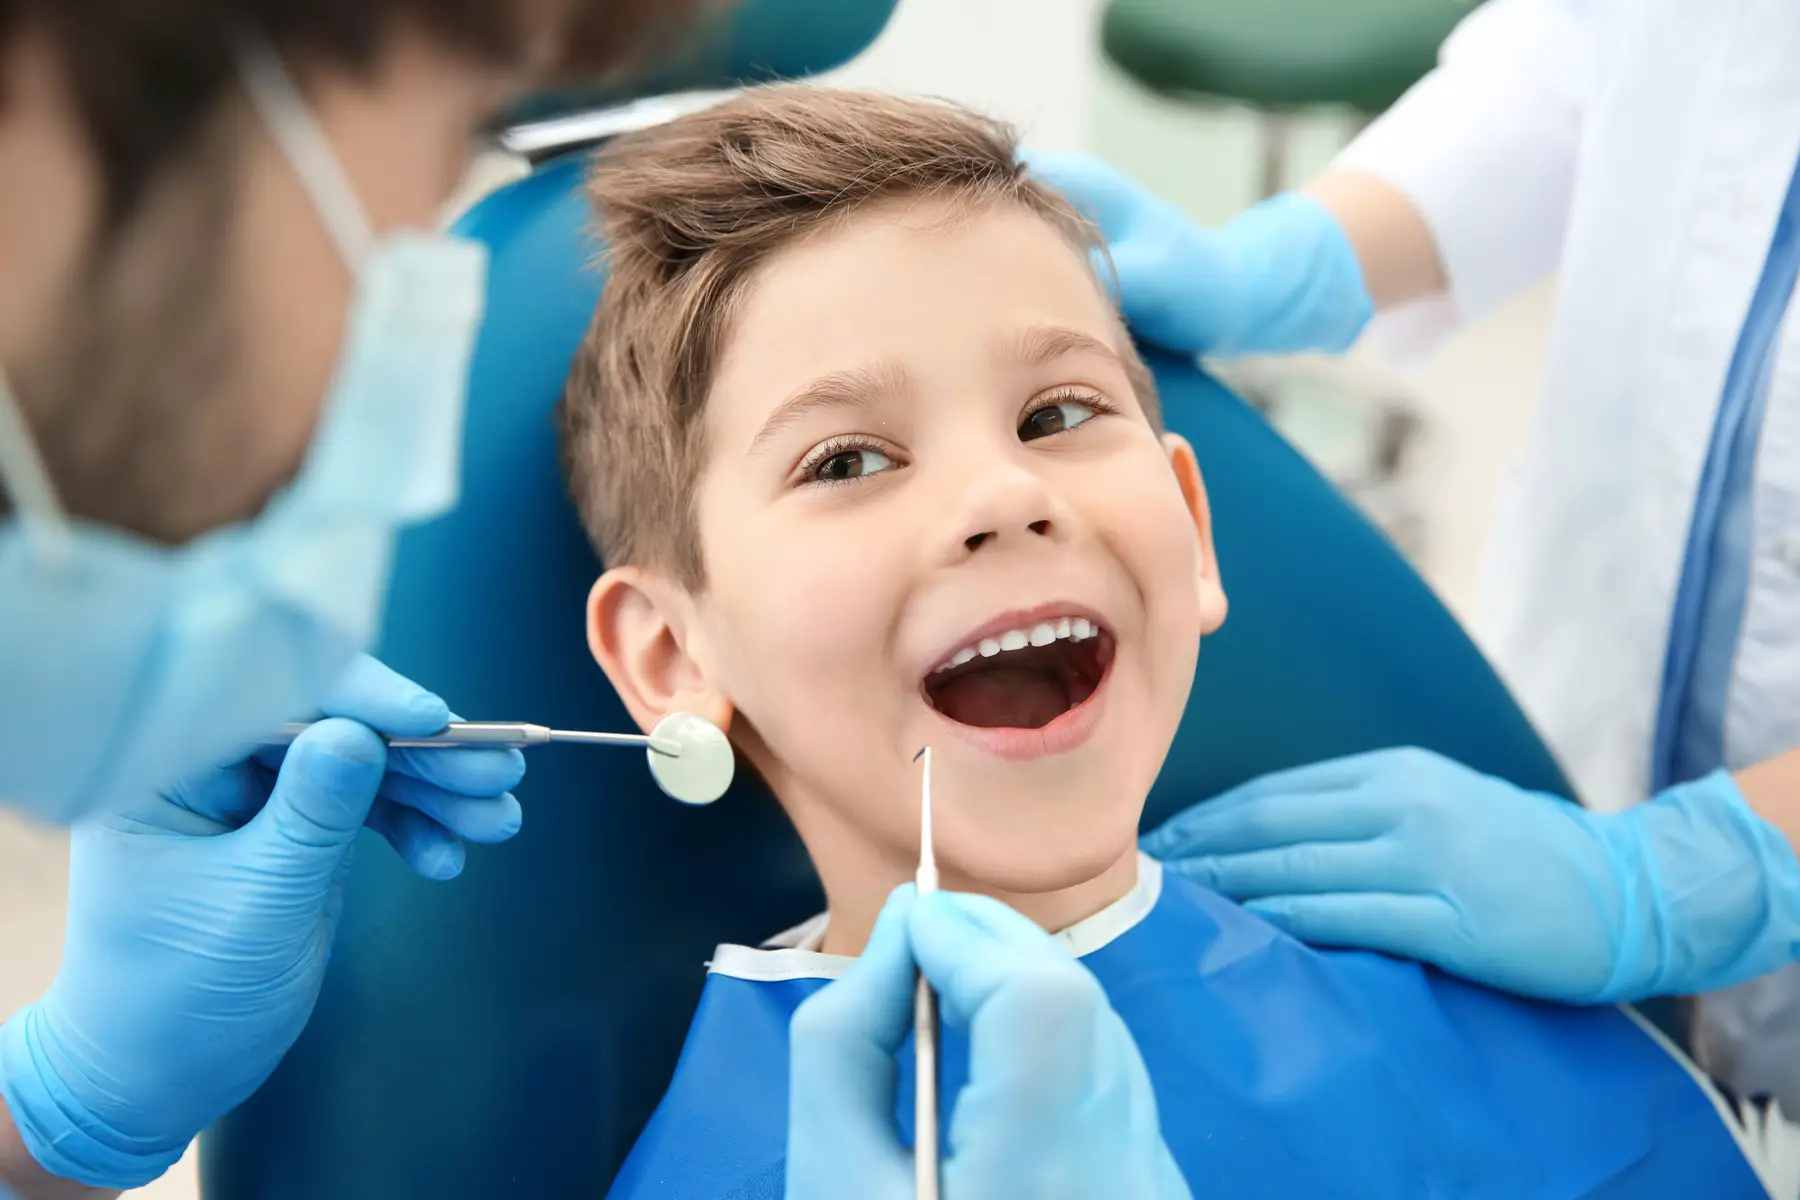 Children’s dental care in the UK